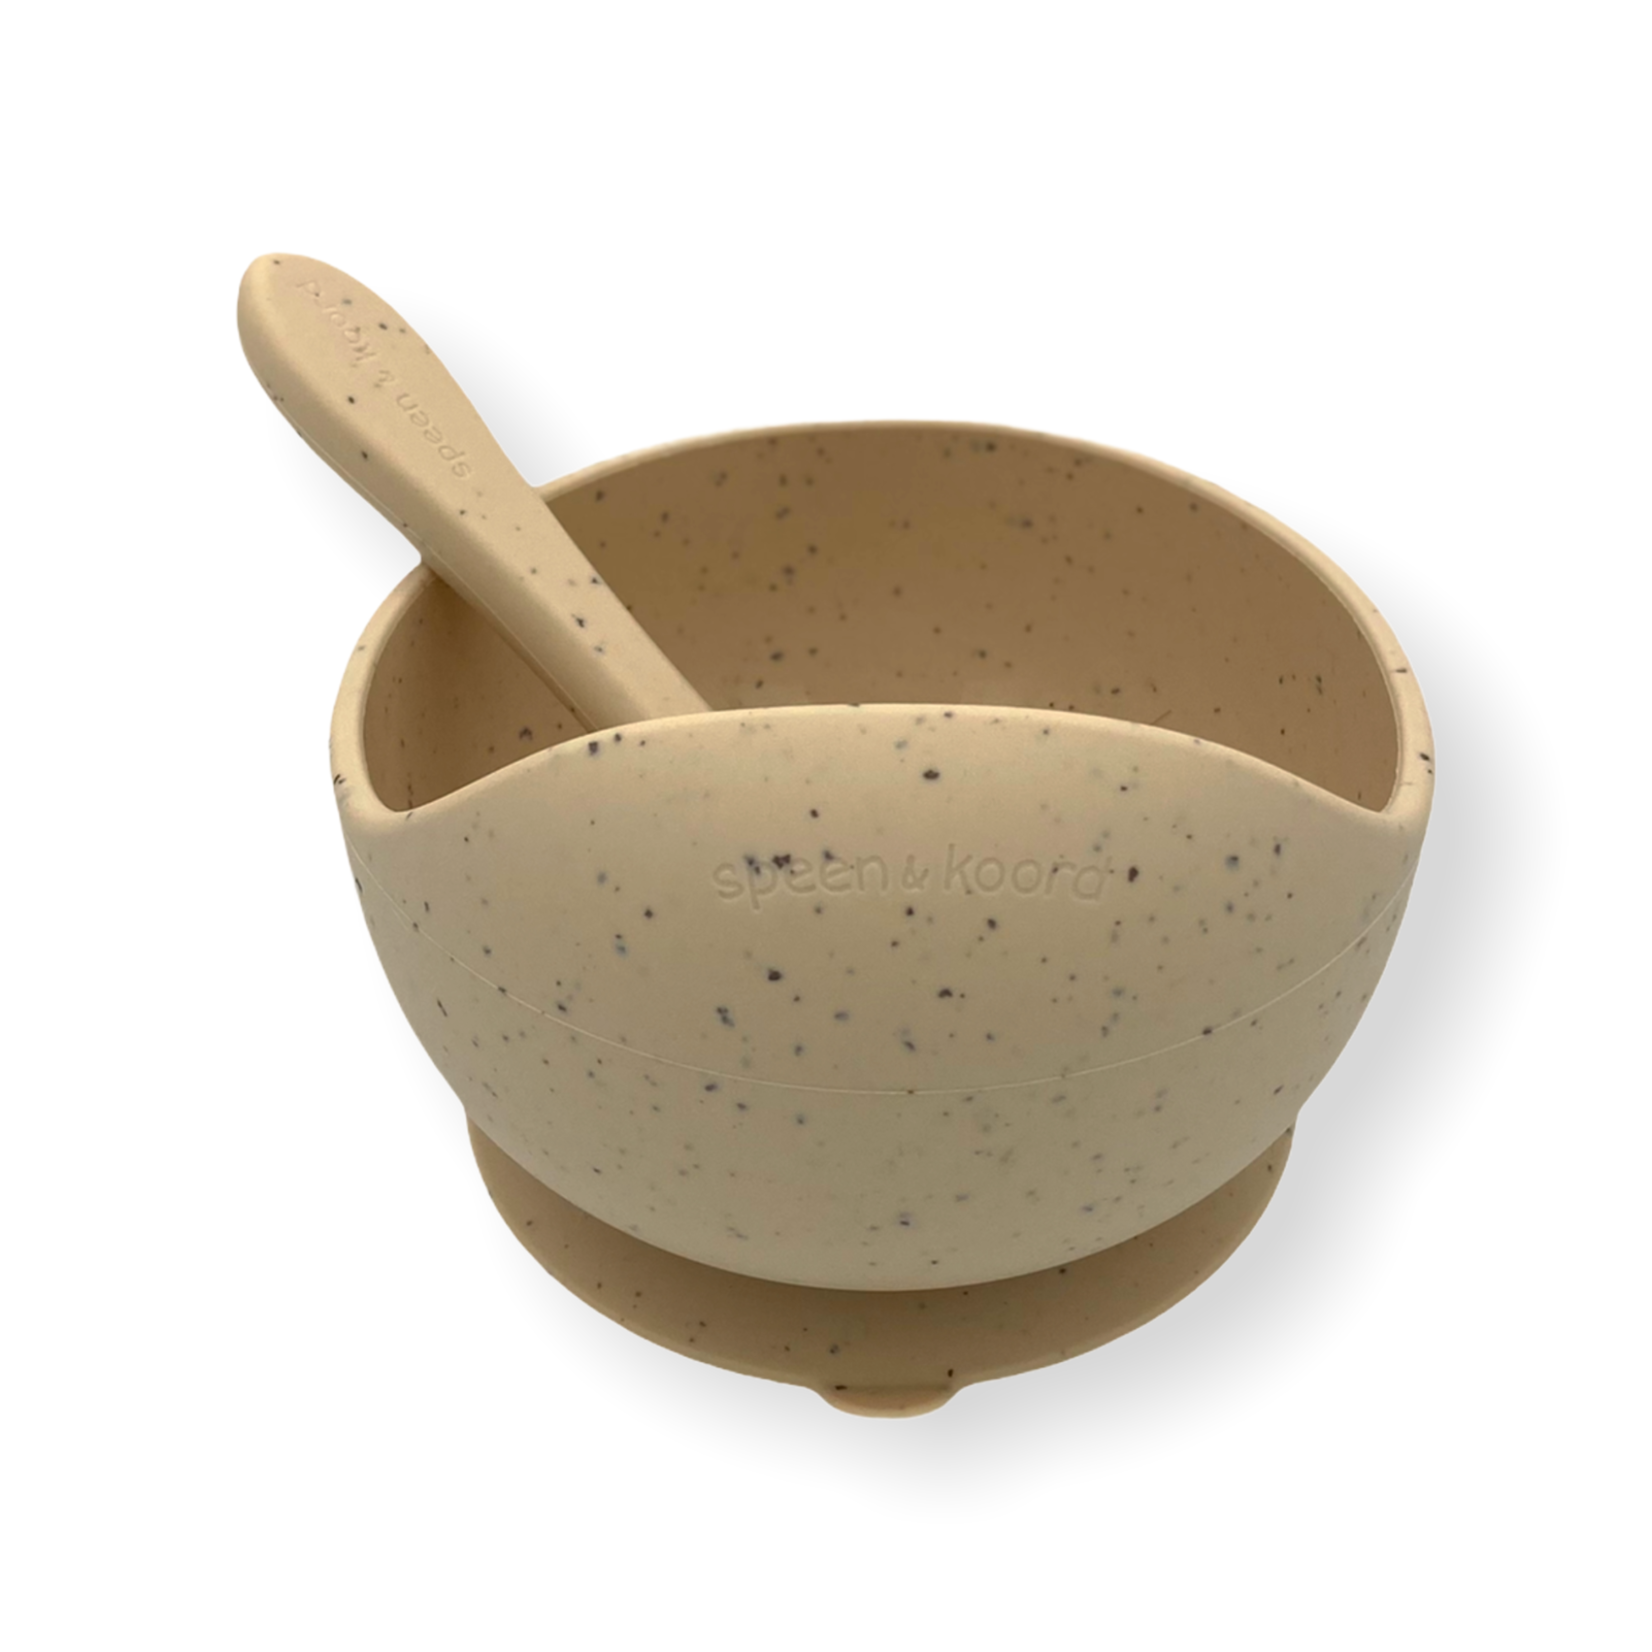 Speen & koord Set bowl & spoon